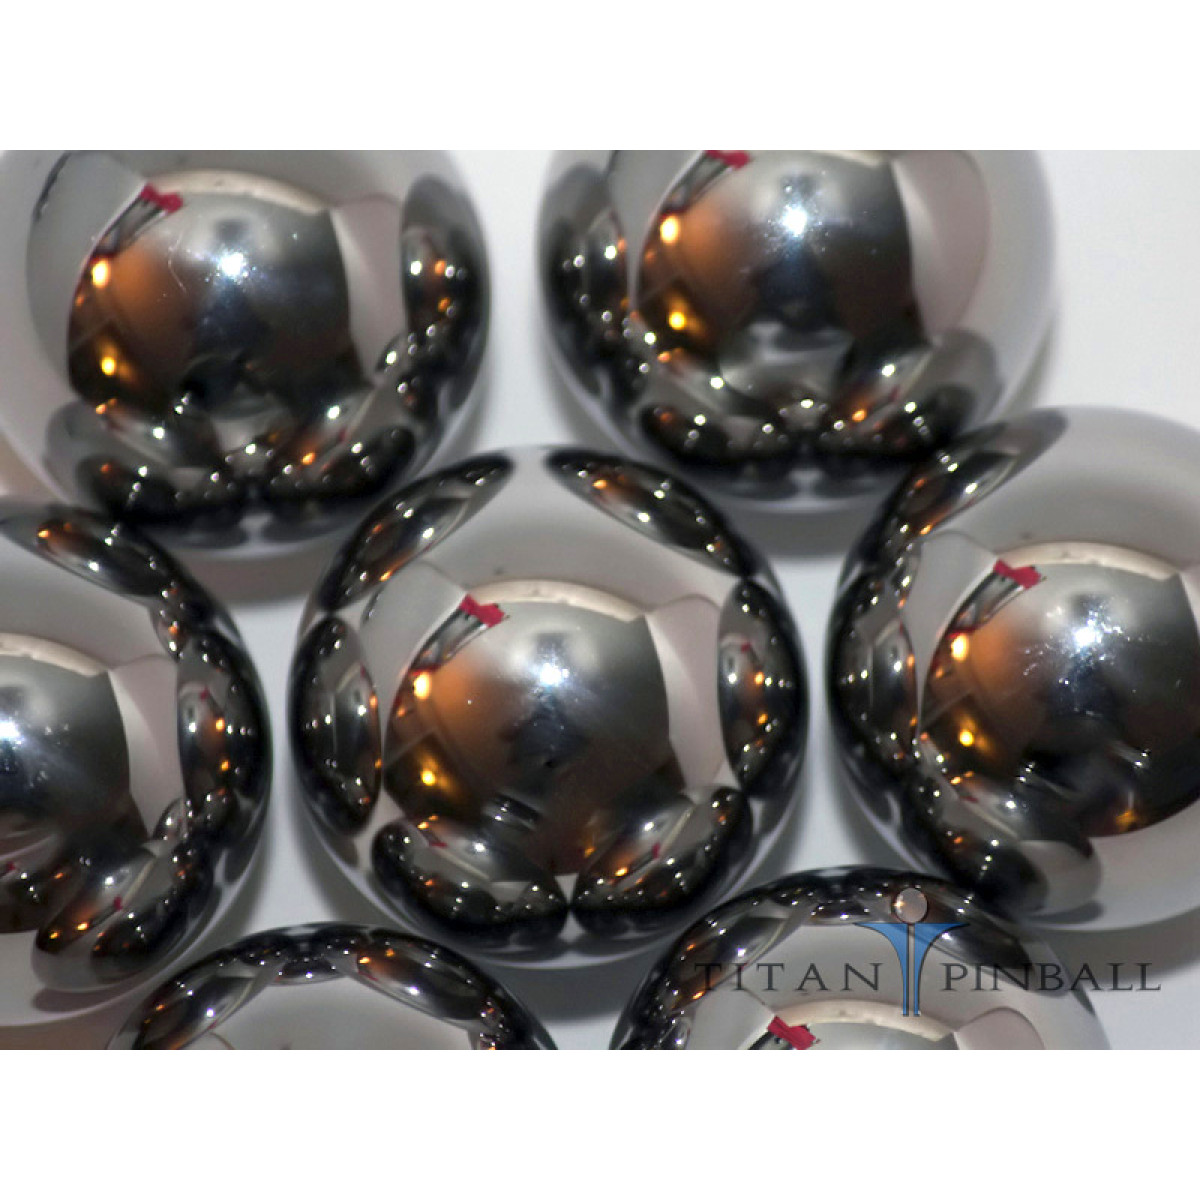 Stern Pinball Flipperkugel Ball 27mm Chromstahl Hochwertige Pinball Steel 1 1/16 